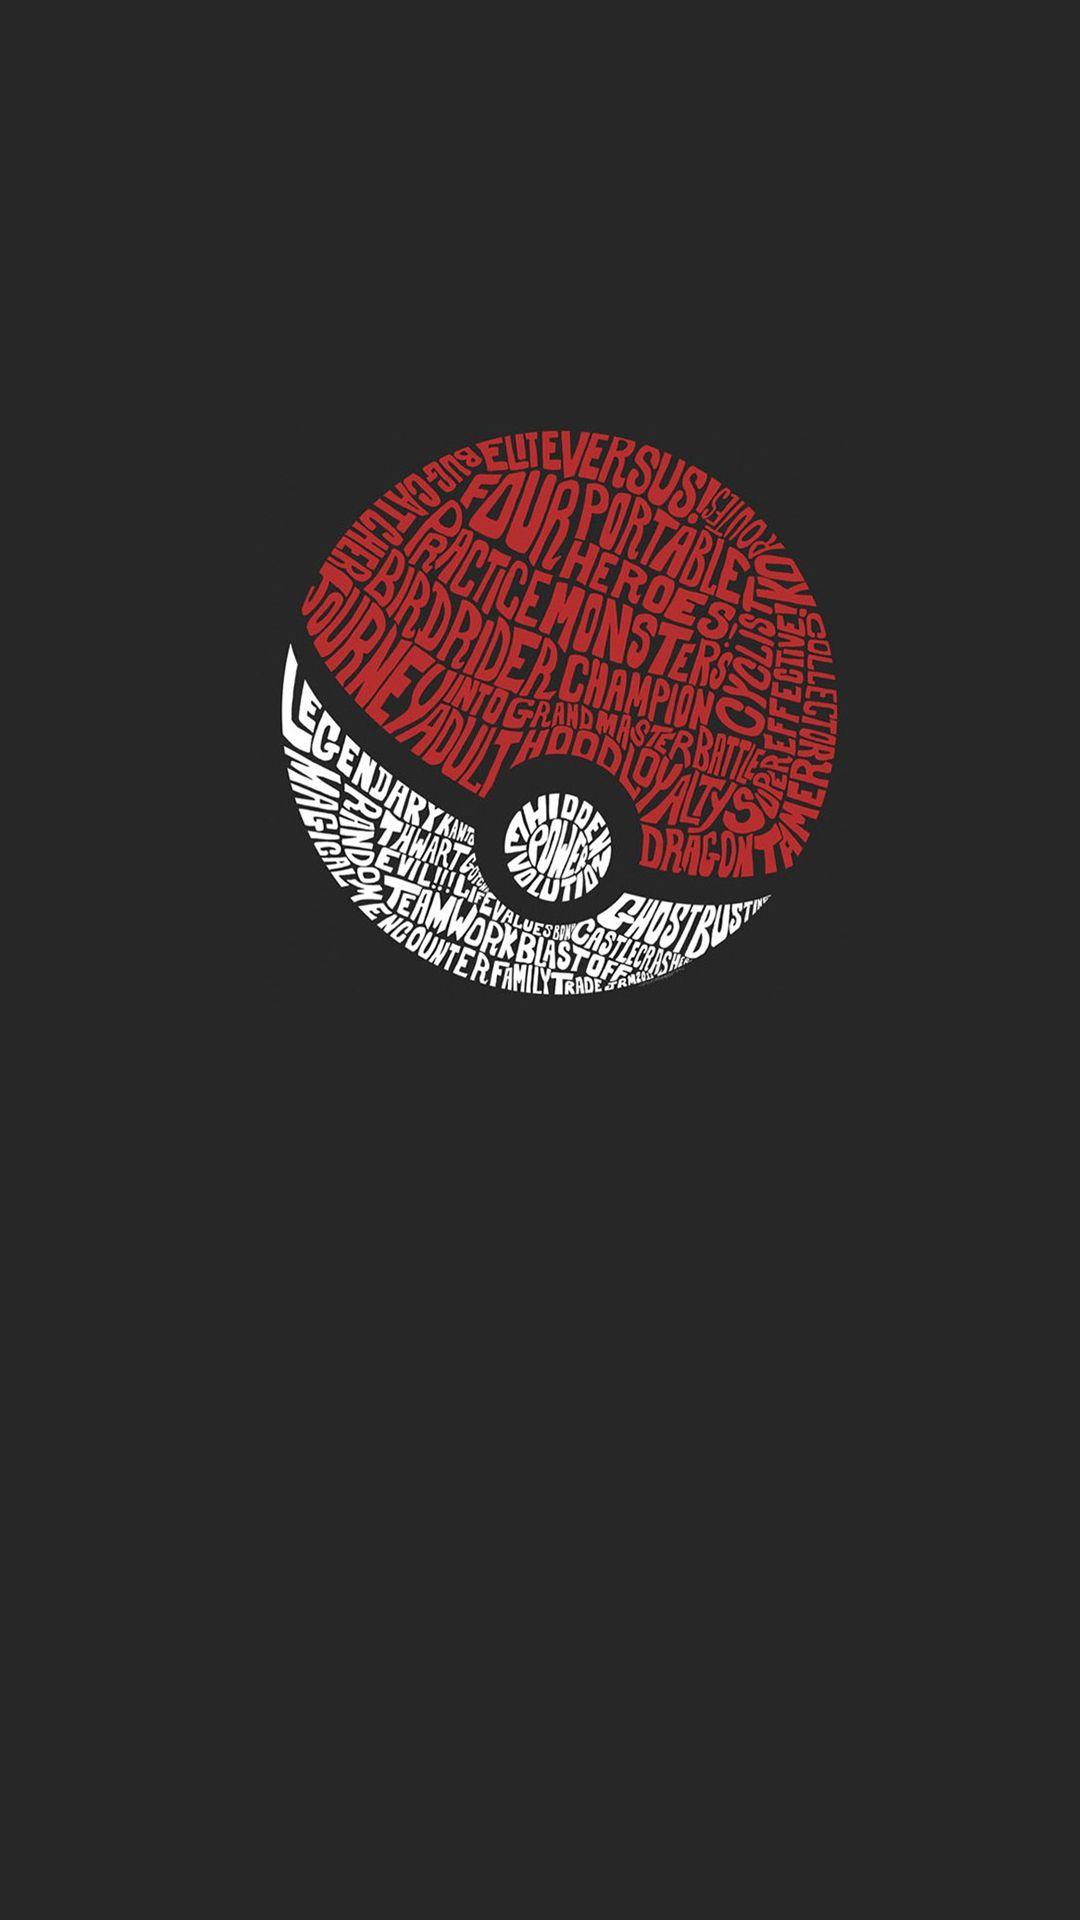 Cool Pokemon iPhone Wallpaper